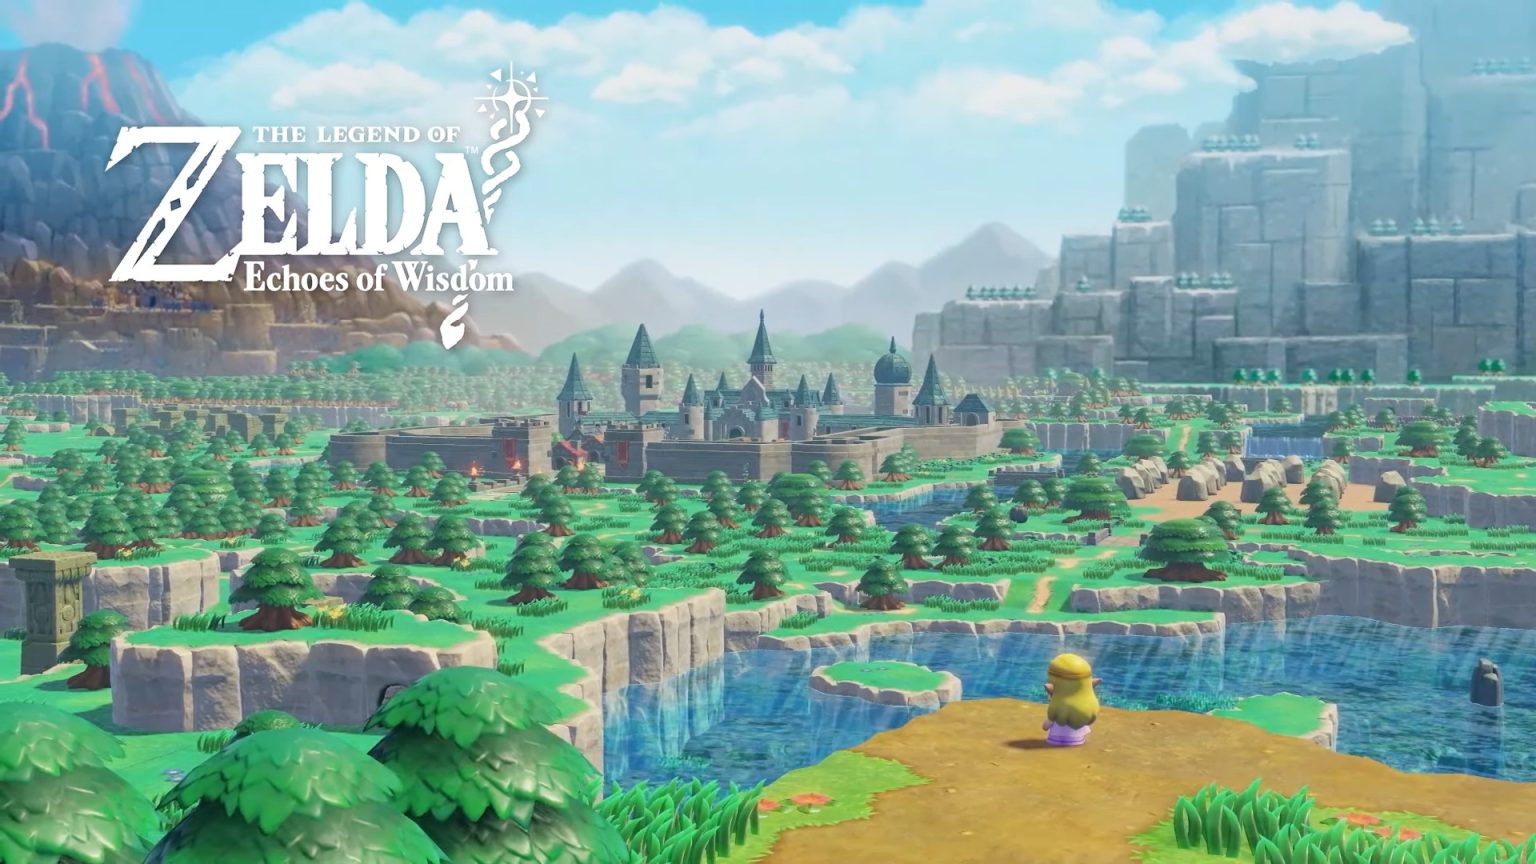 Nintendo announced The Legend of Zelda: Echoes of Wisdom - release on 26 September